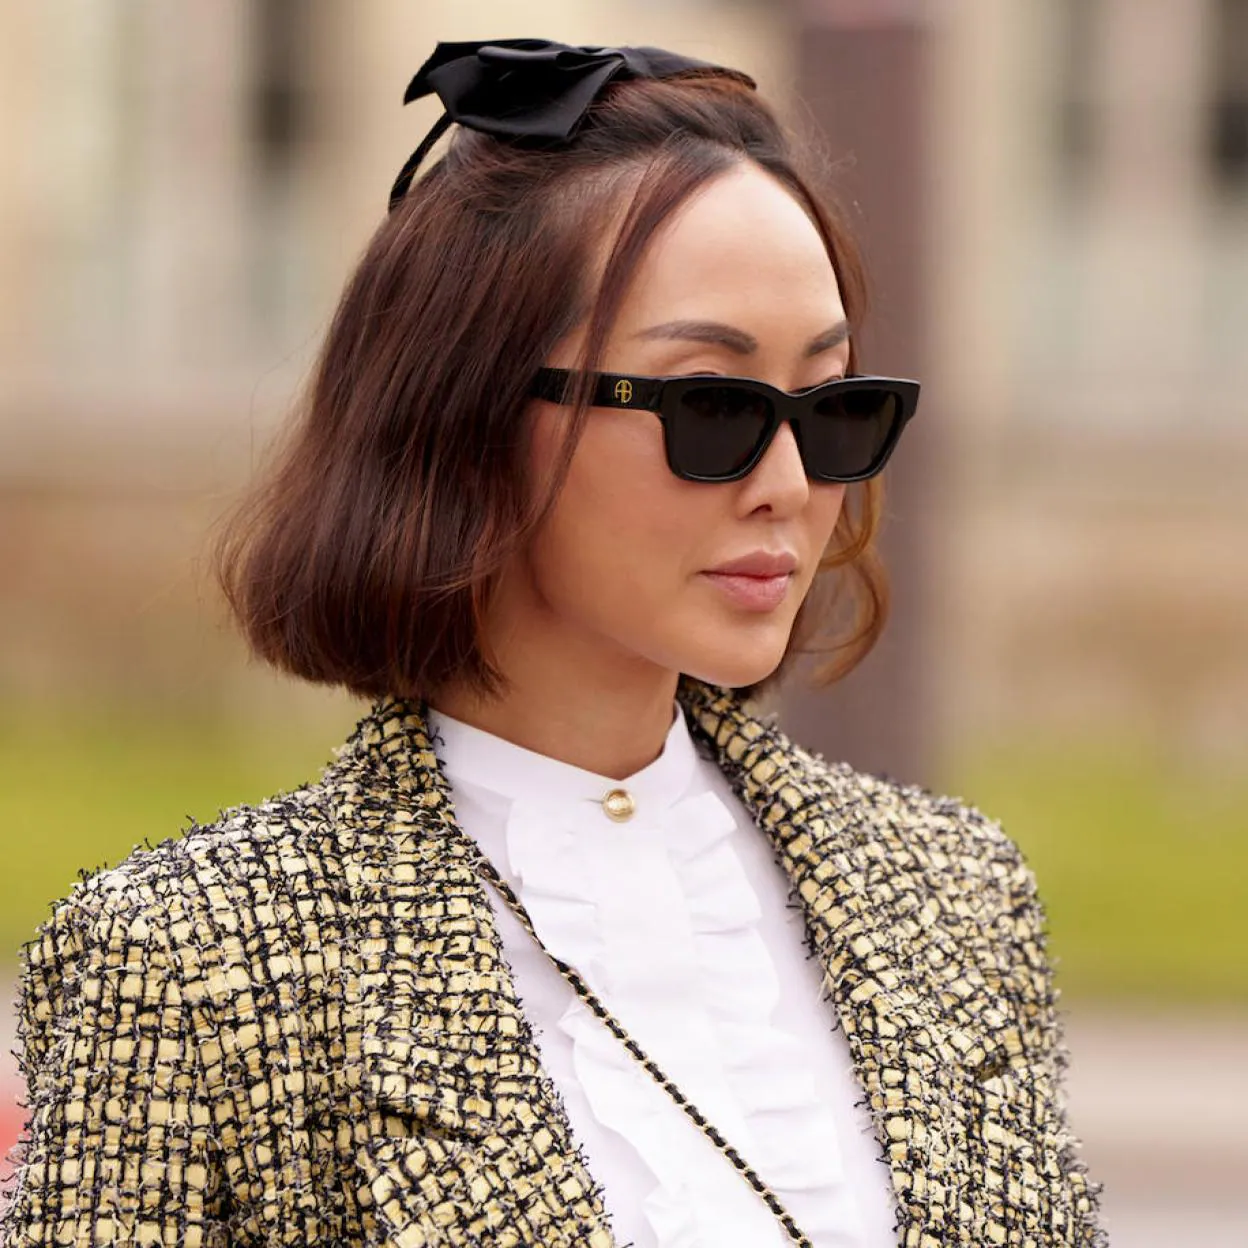 Louis Vuitton La Grande Belleza black sunglasses of Millie Bobby